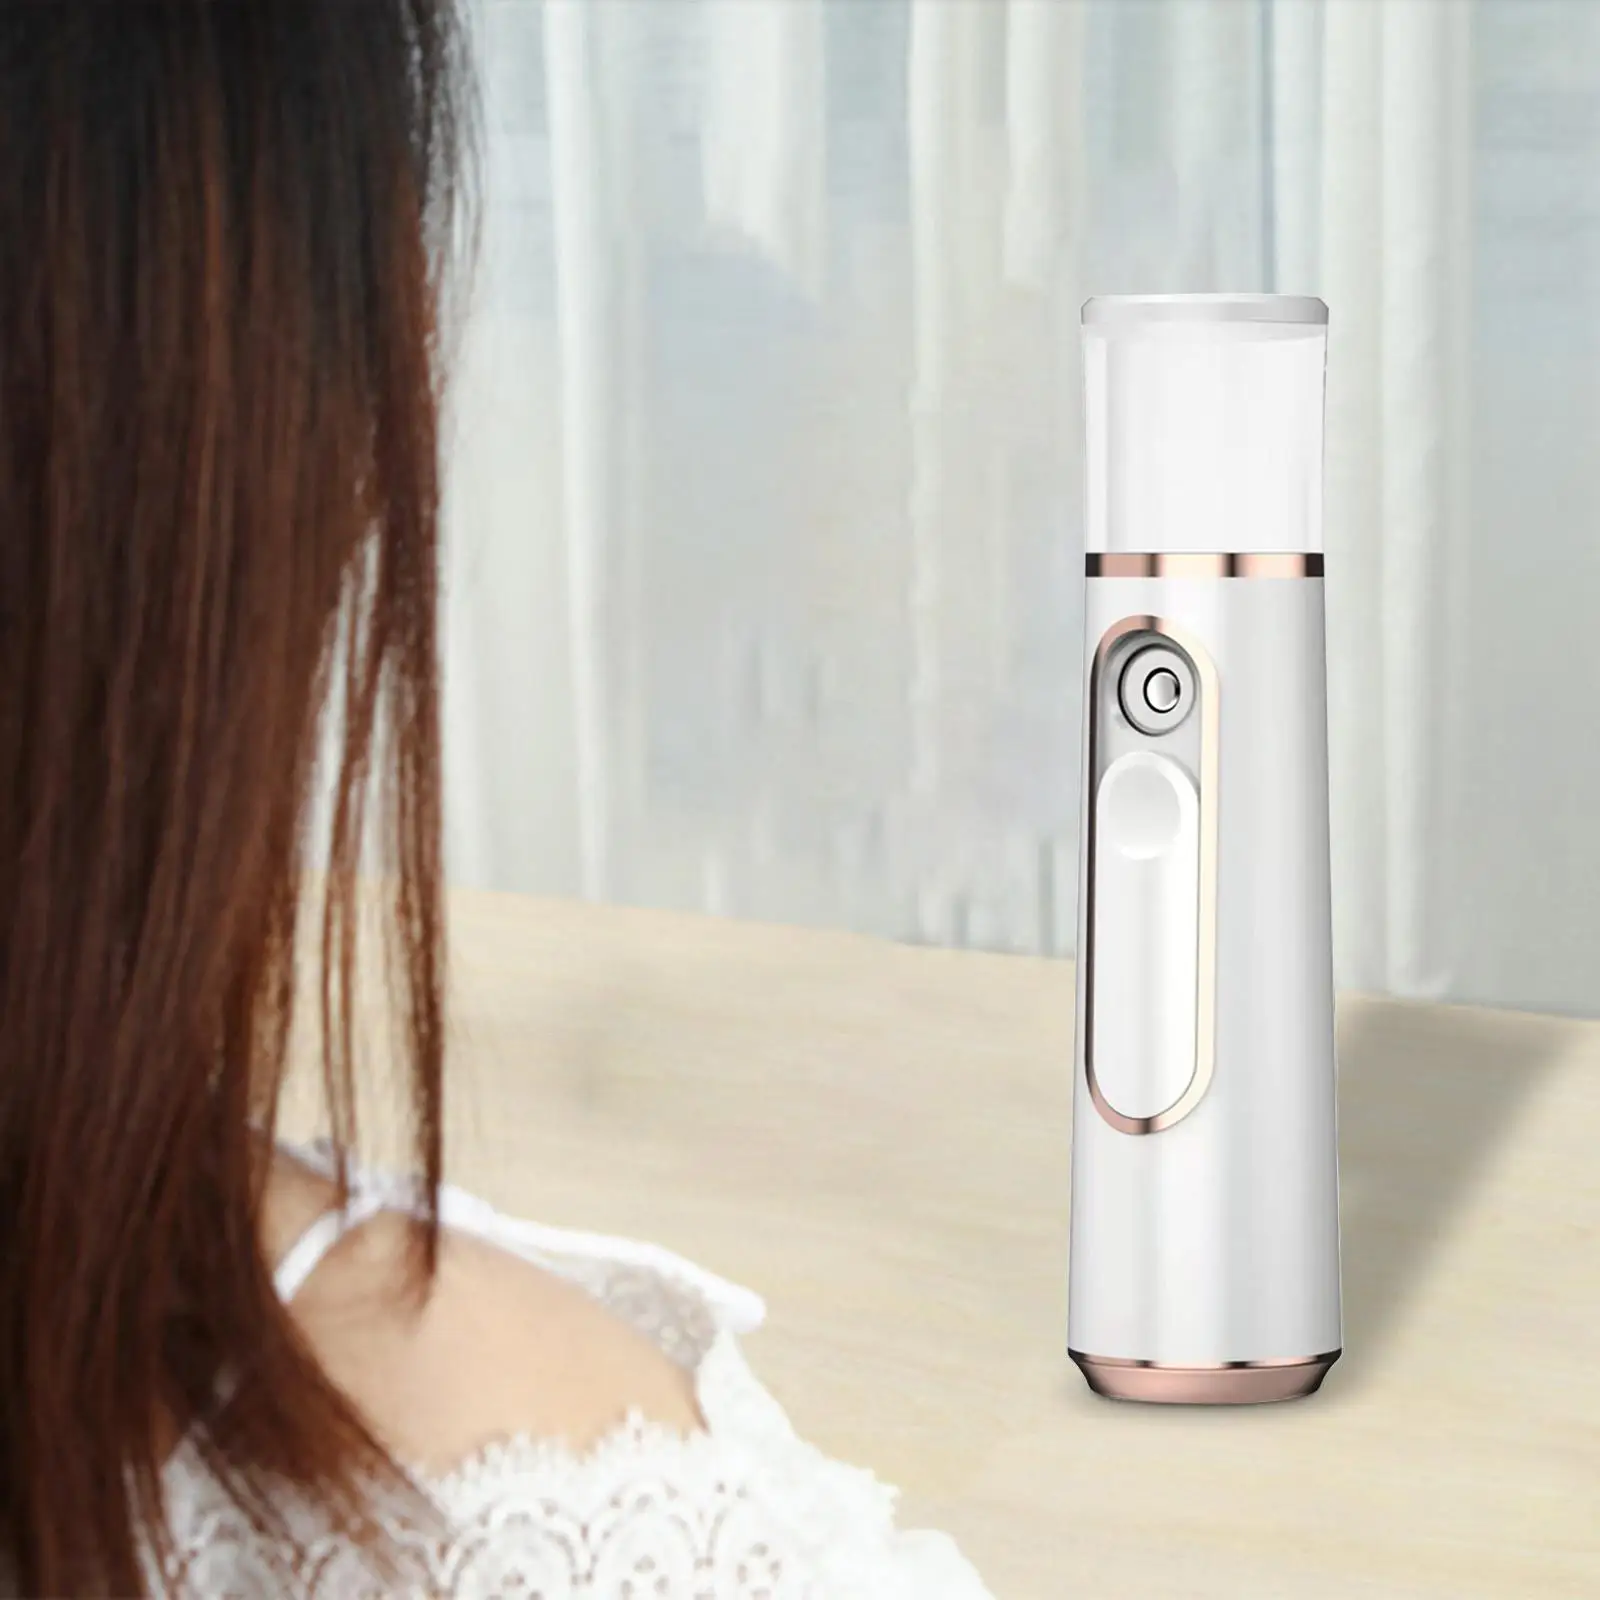 Mini Handy Nano Facial Mister Face Steamer Hydrating Refreshing Moisturizing Cooler for Travel Home Skin Care Eyelash Extensions